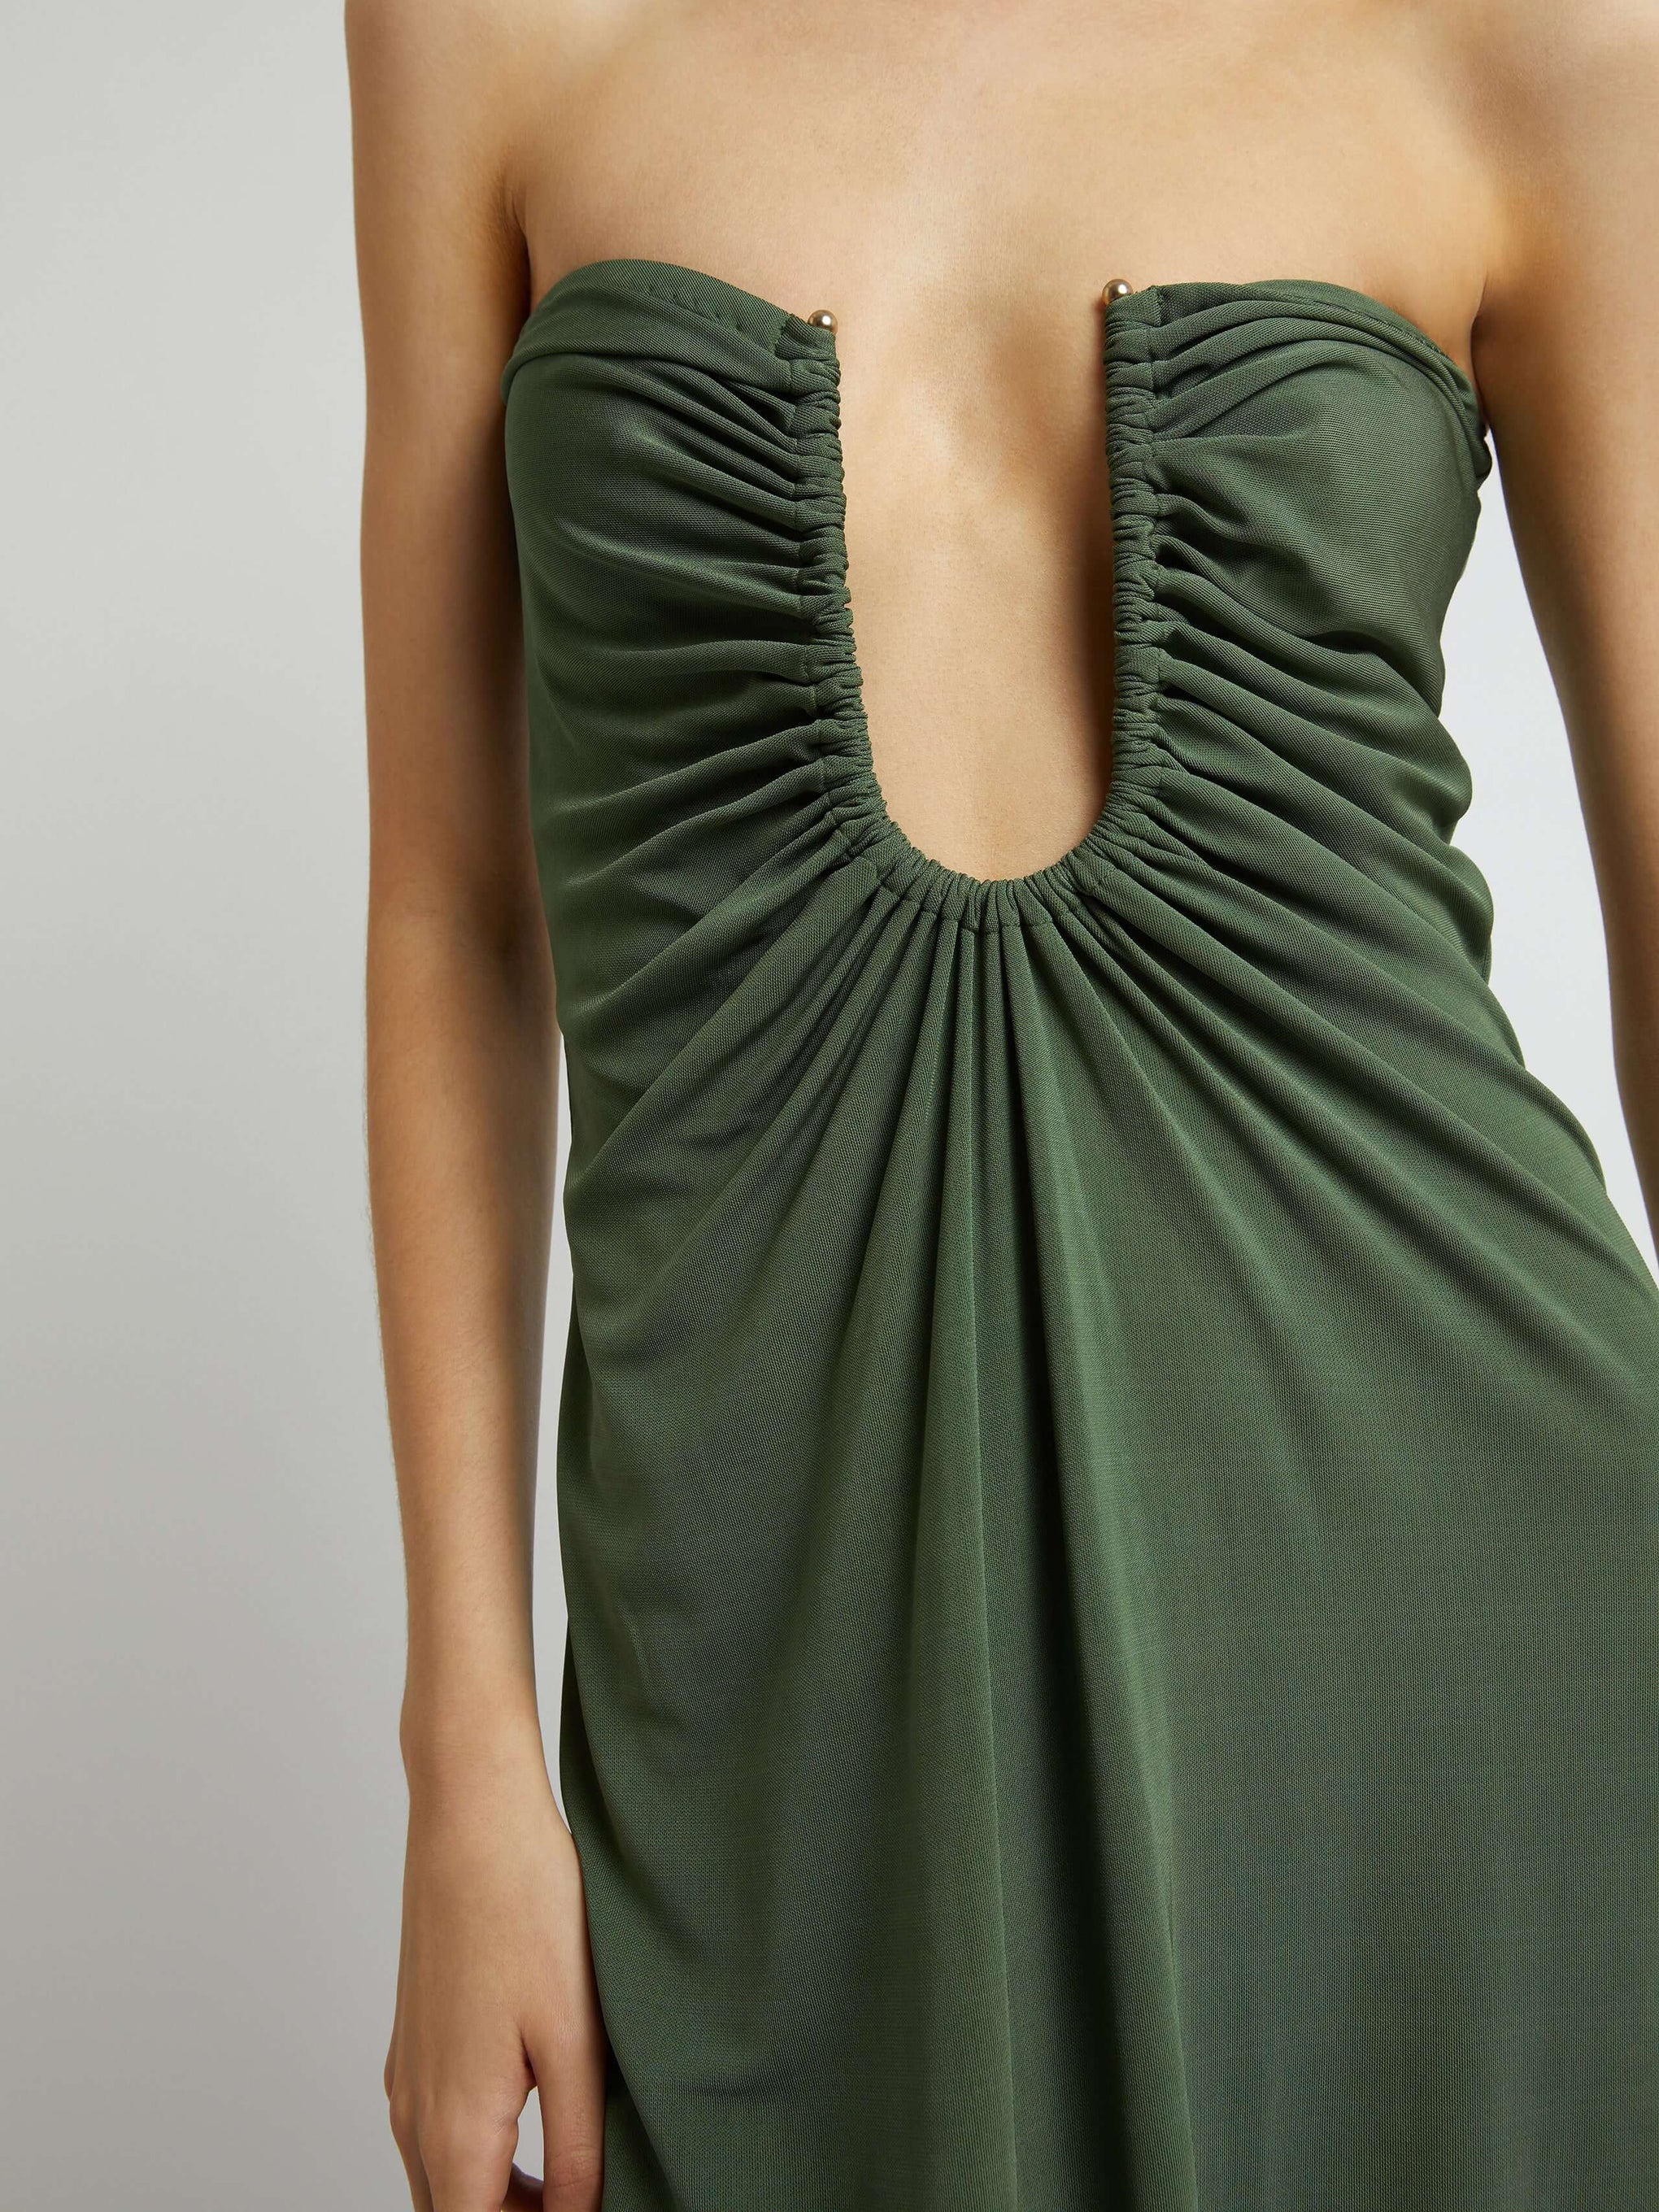 Christopher Esber Arced Palm Strapless Dress in Bottle Green available at TNT The New Trend Australia.